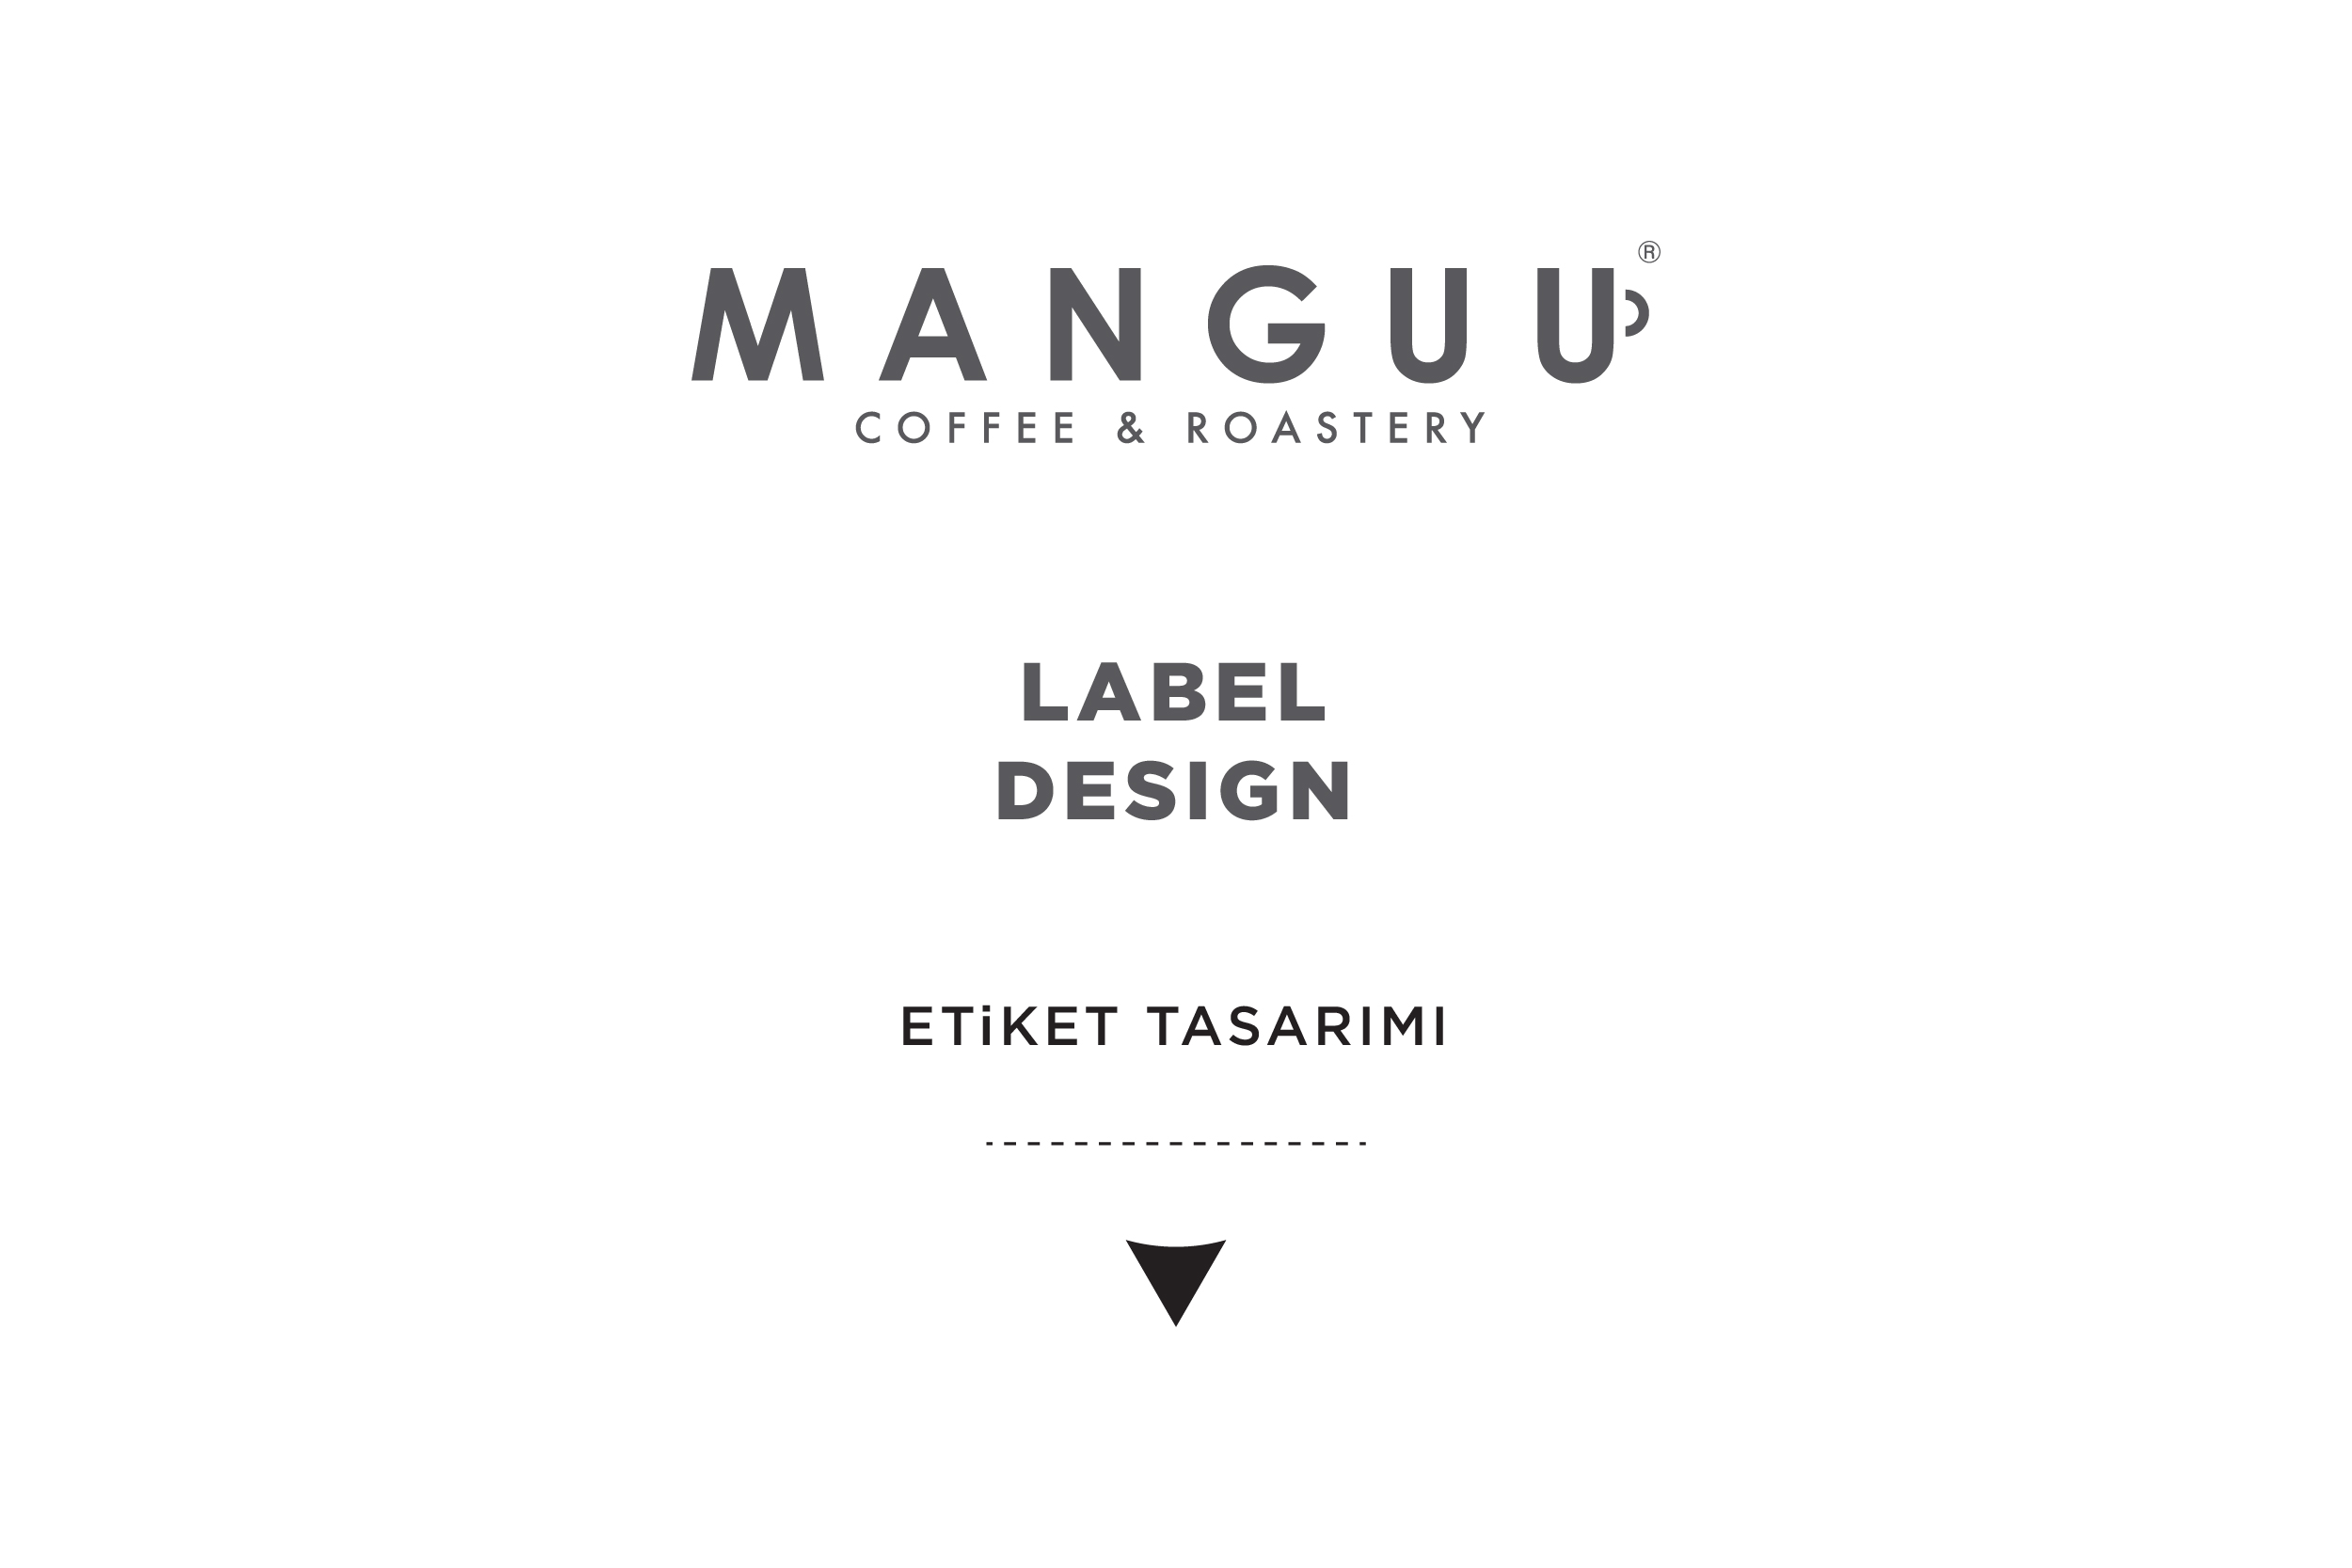 Manguu Coffee&Roastery - Label Design